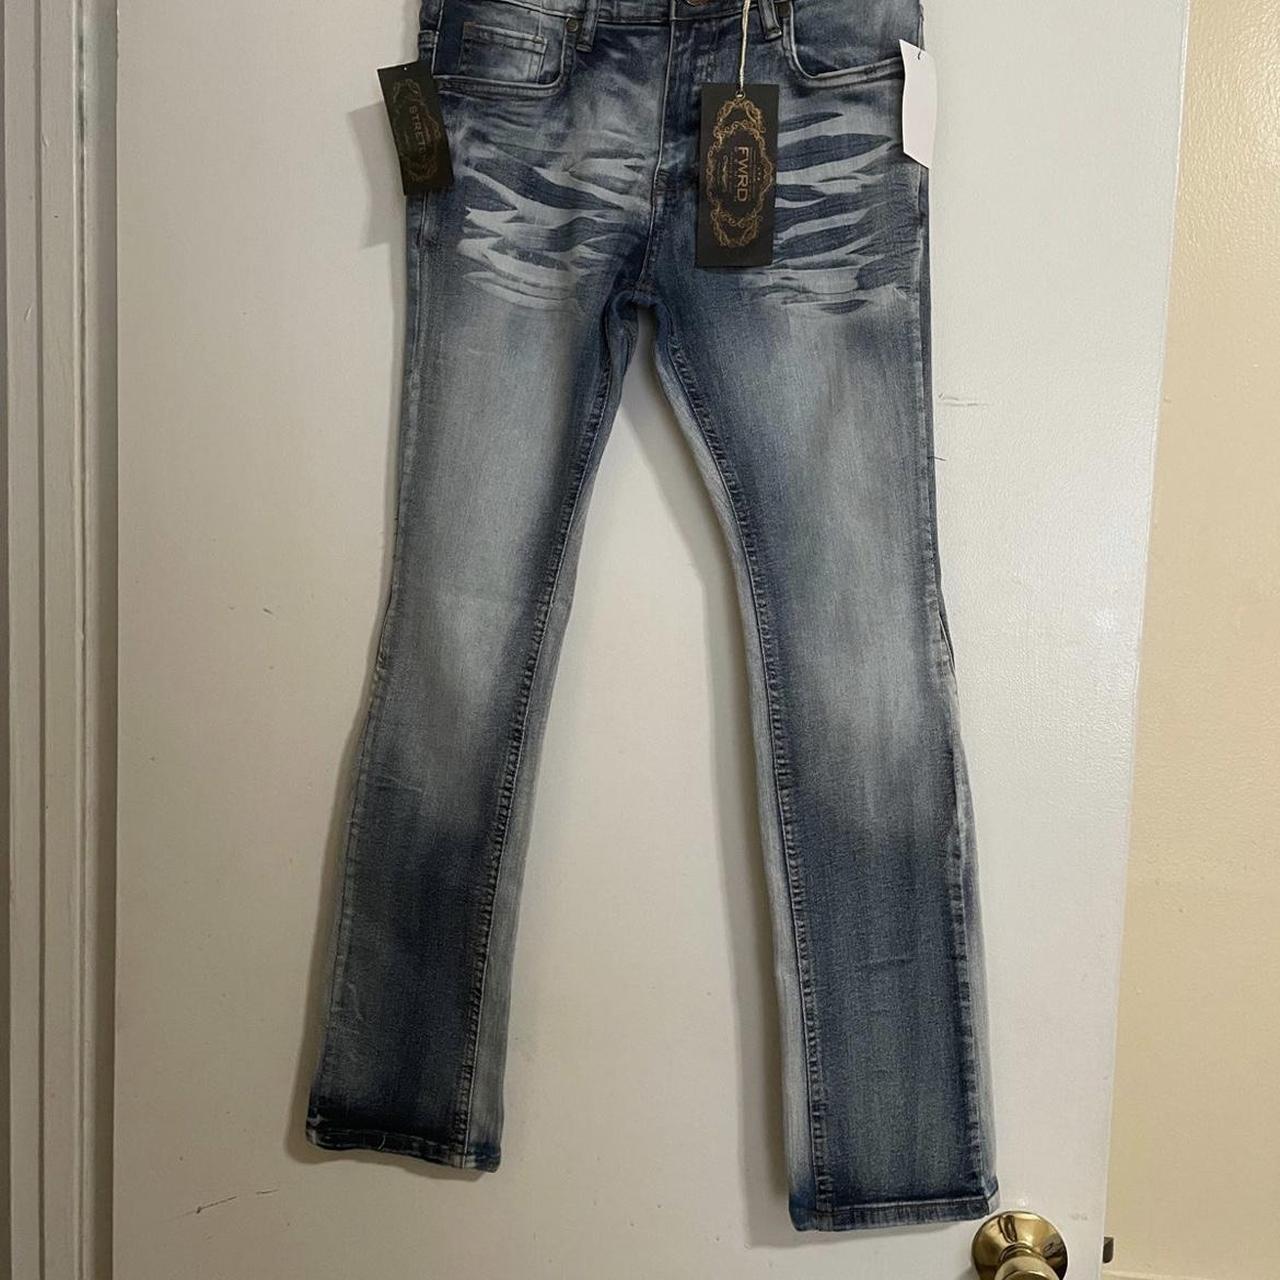 FWRD DENIM Boys Jeans, - Brand new , - Tags intact, 